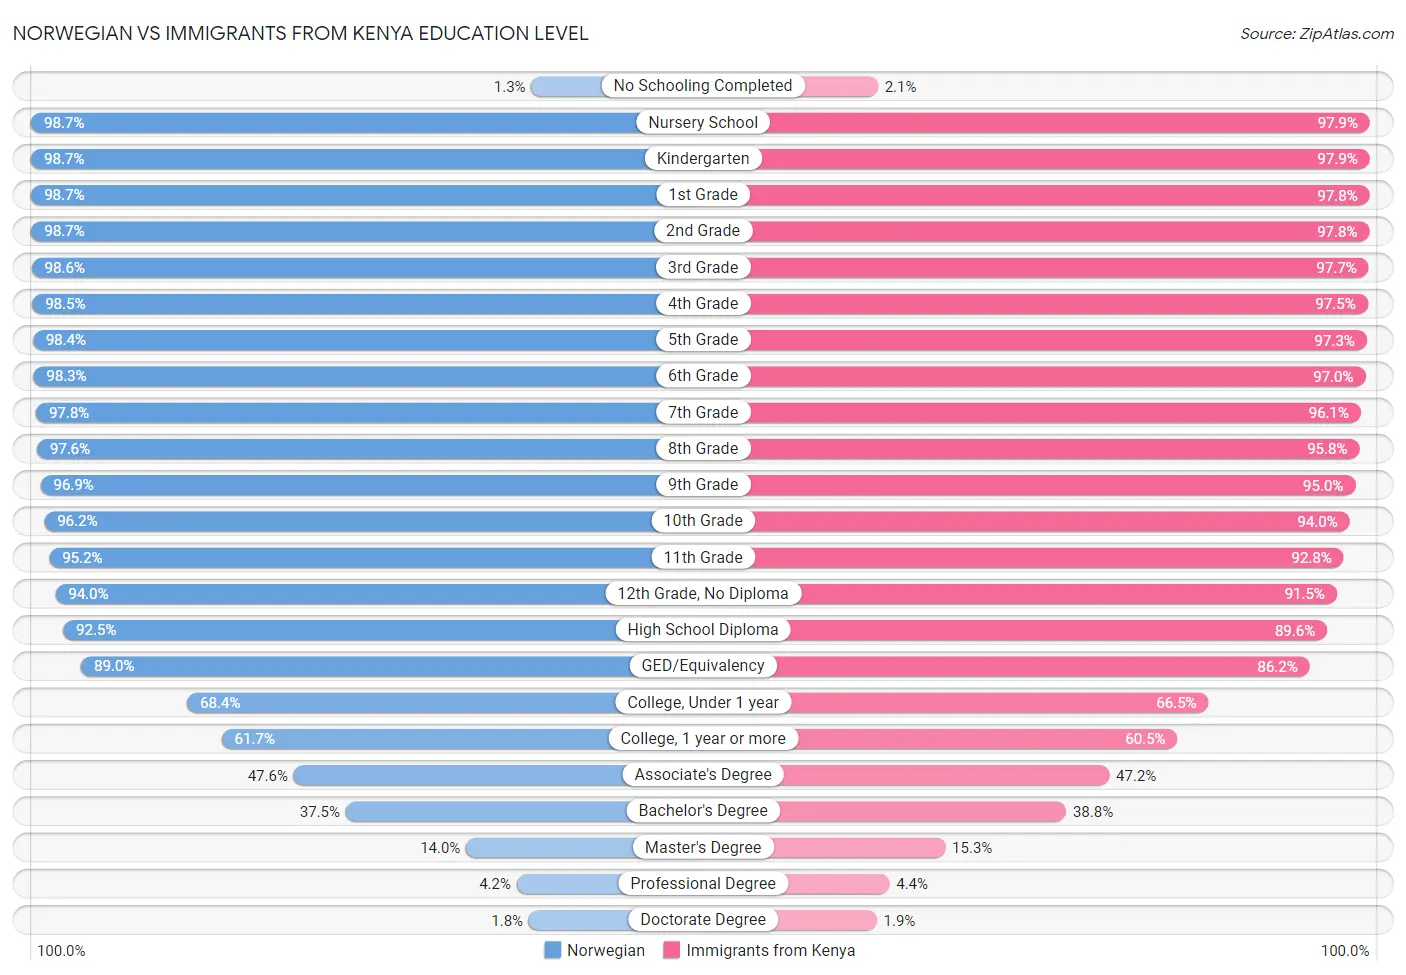 Norwegian vs Immigrants from Kenya Education Level